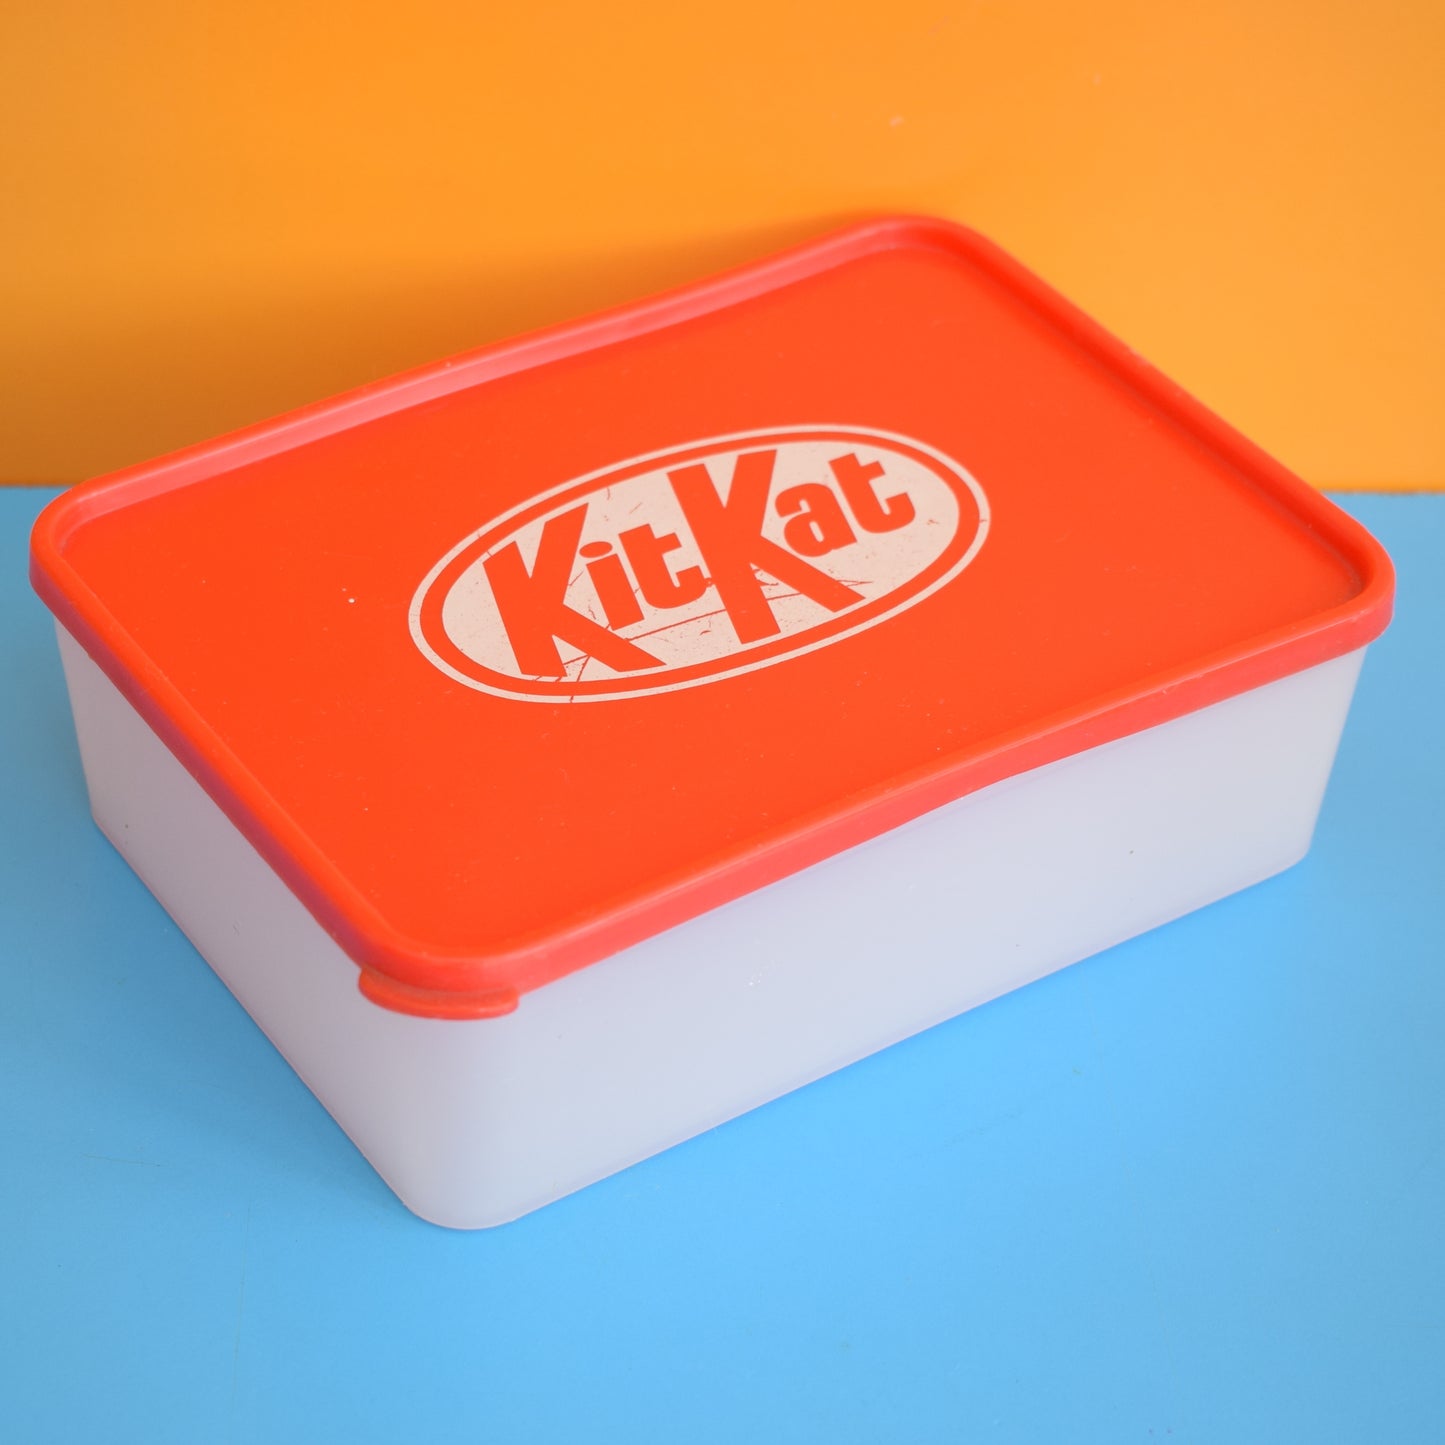 Vintage 1980s Plastic KitKat Lunchbox